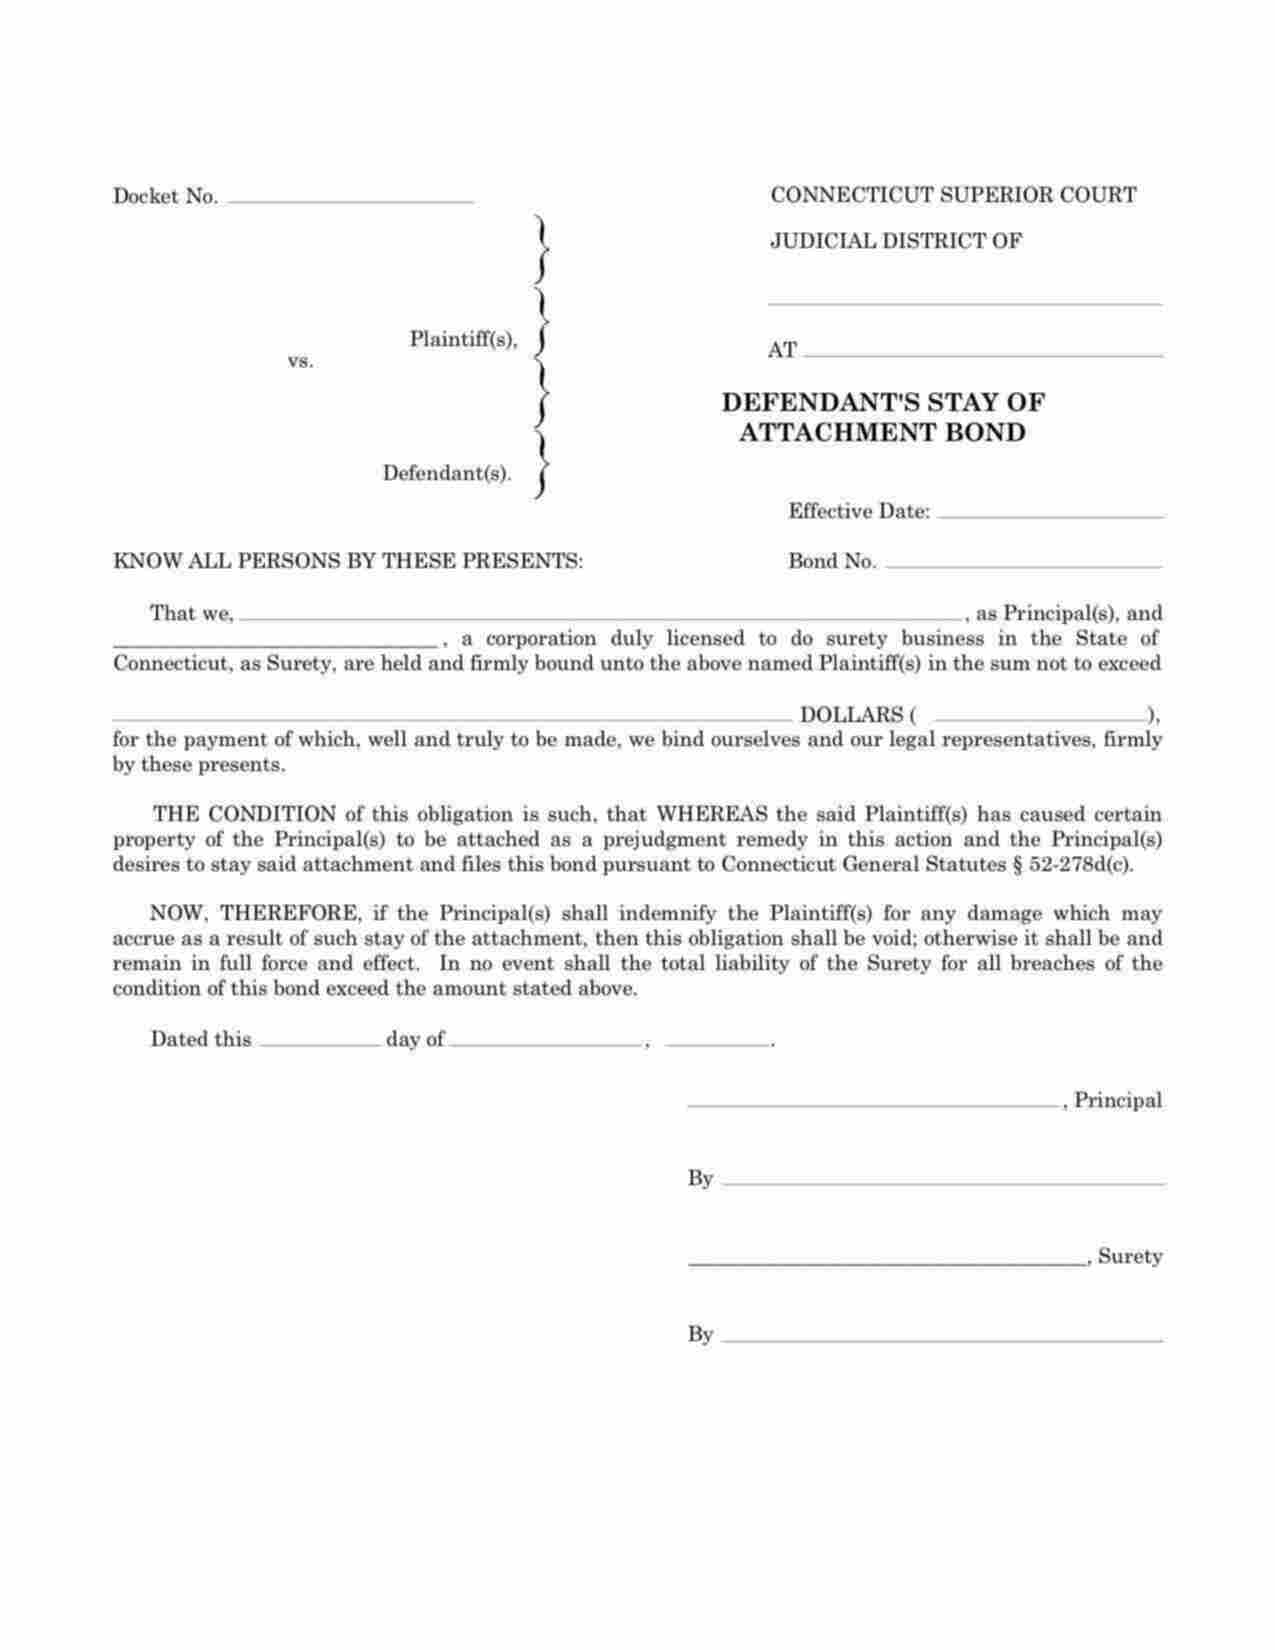 Connecticut Defendants Stay of Attachment Bond Form